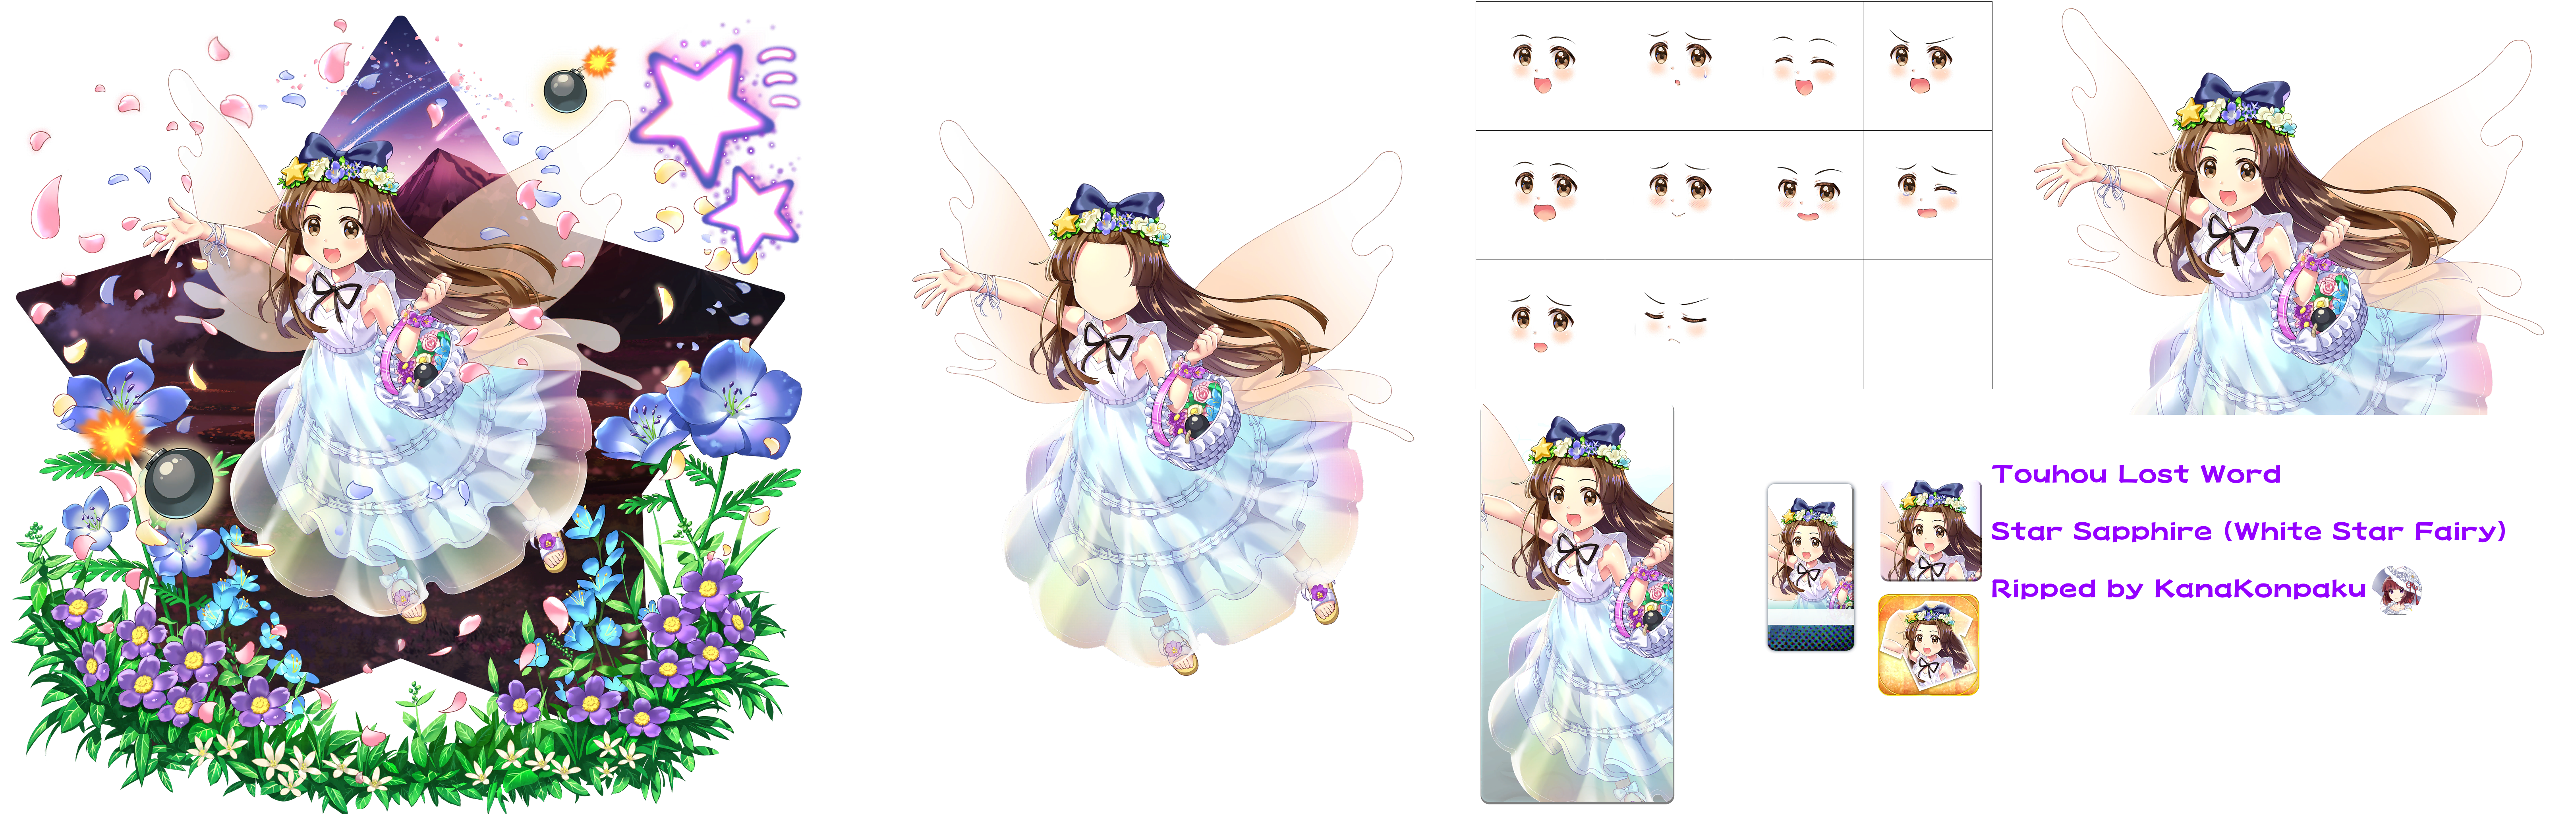 Touhou LostWord - Star Sapphire (White Star Fairy)